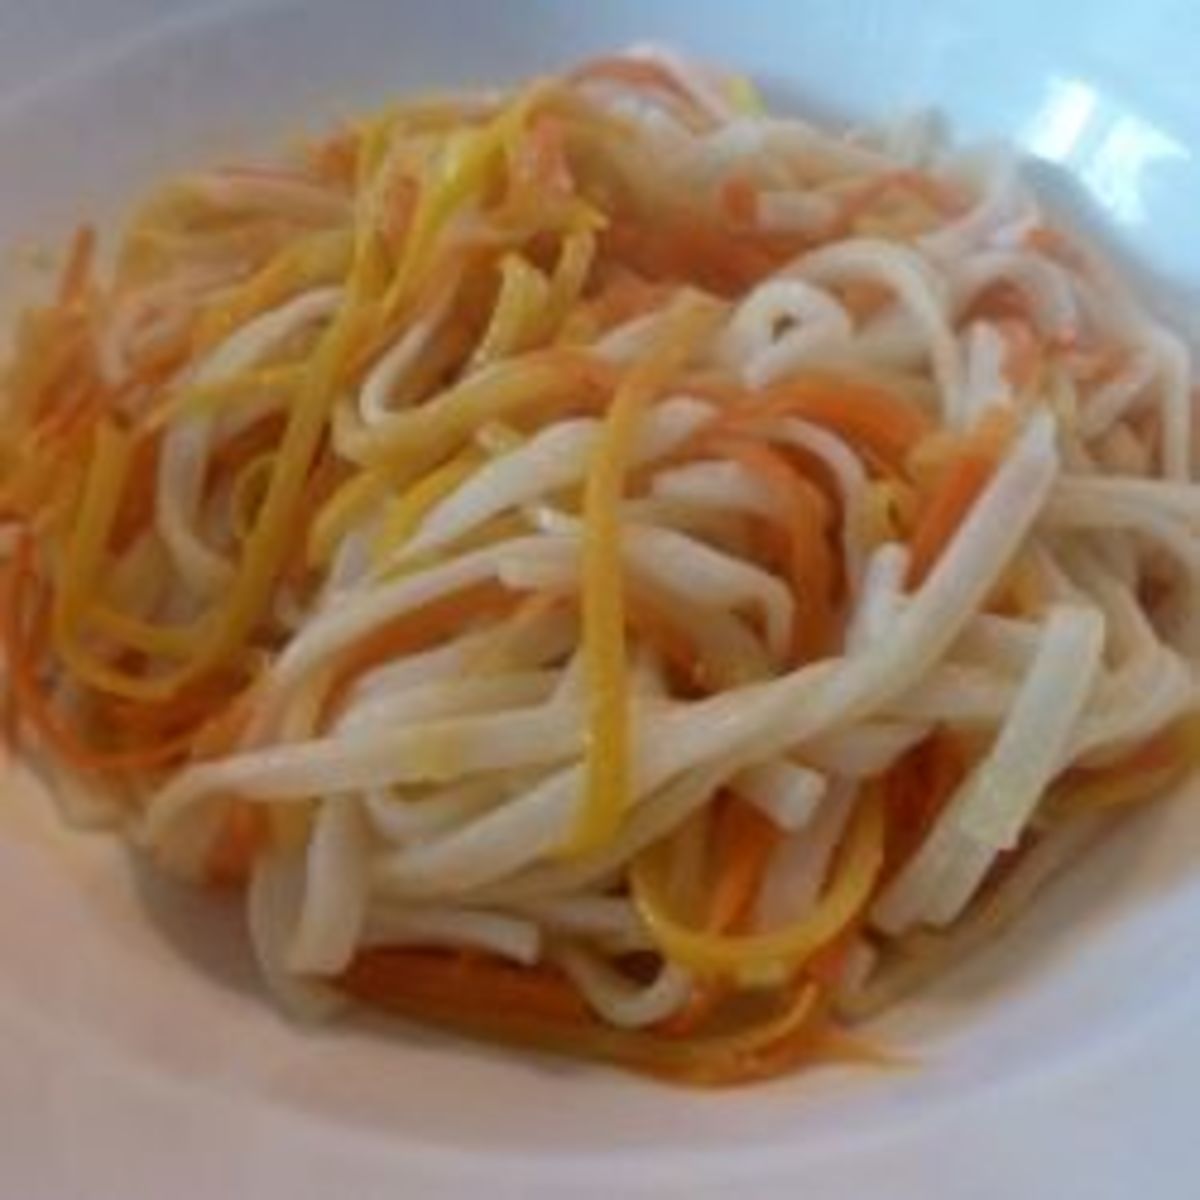 Make spaghetti from veggies